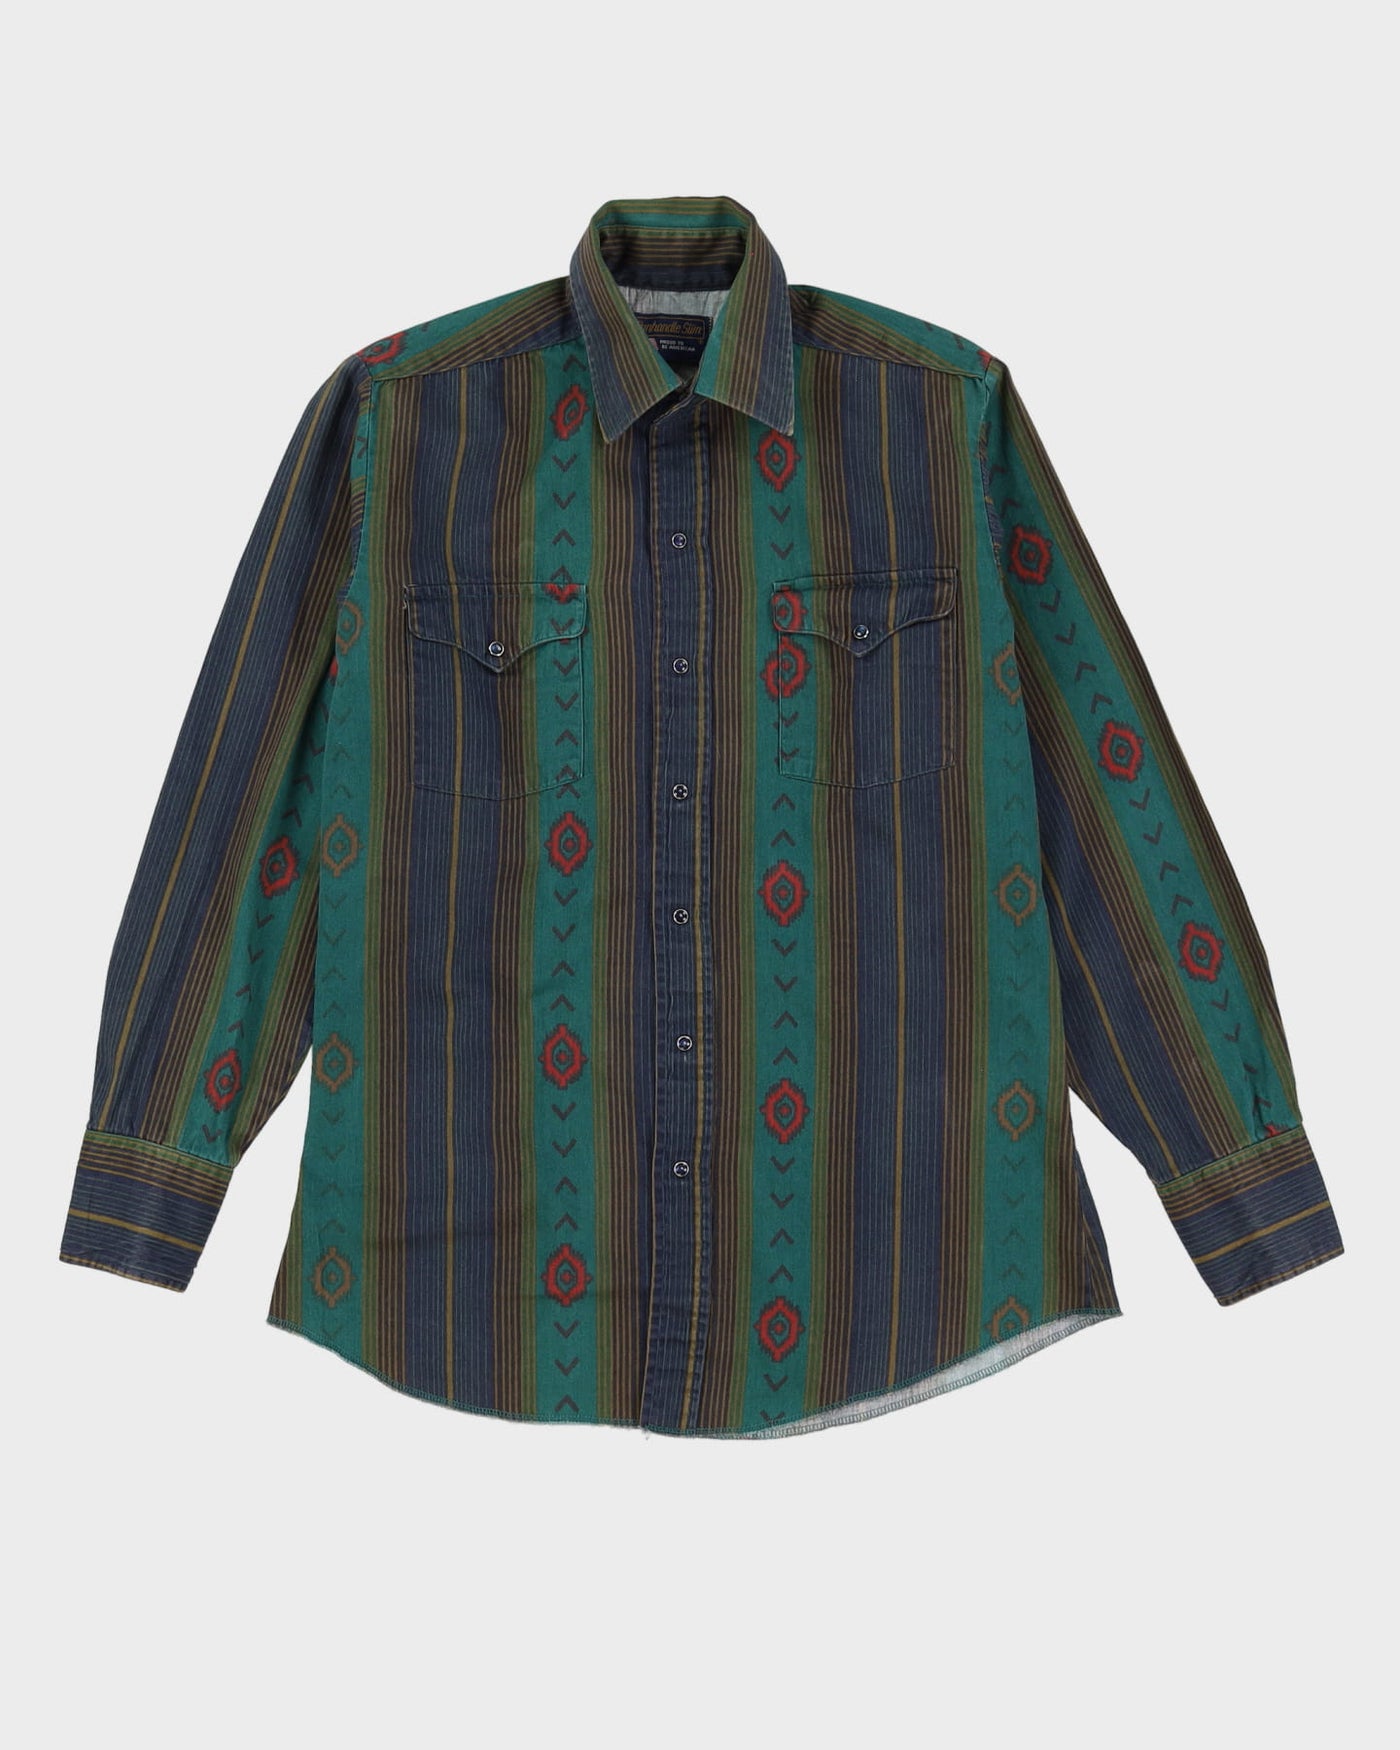 Panhandle Slim Long-Sleeve Green Patterned Western Shirt - M